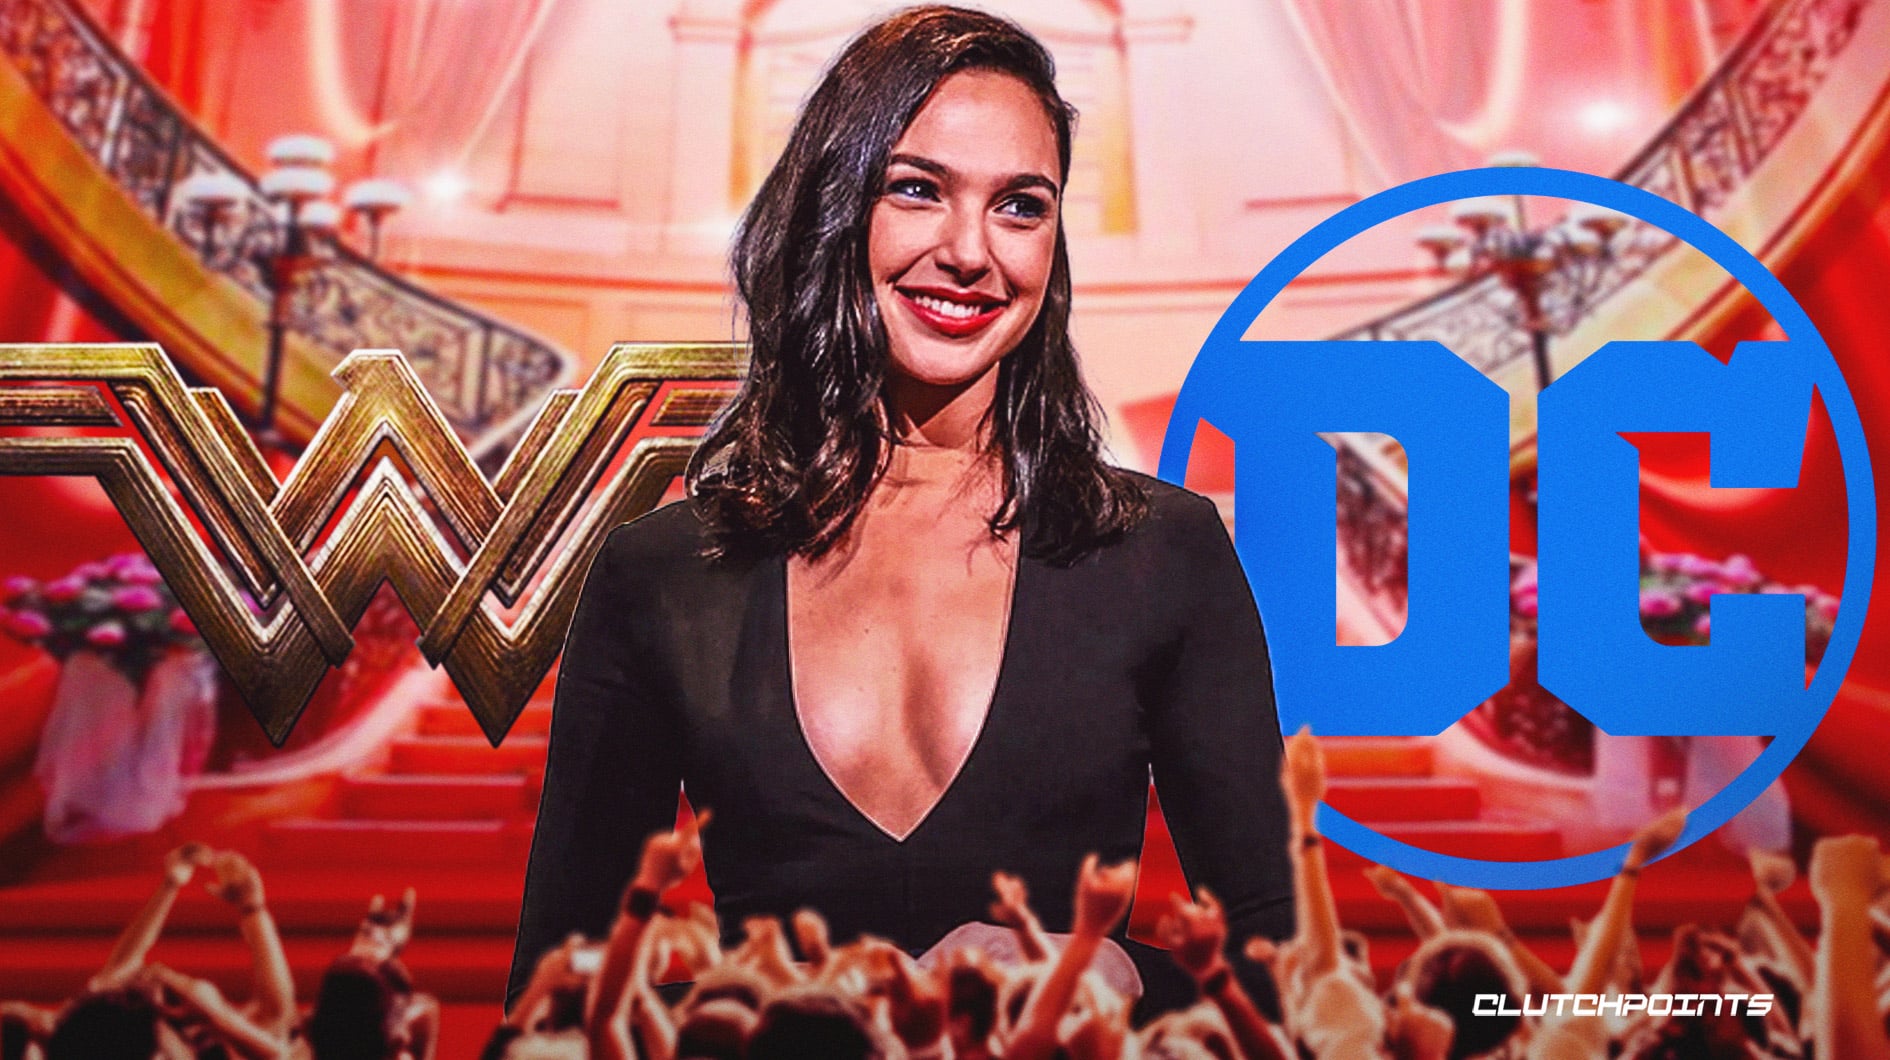 DC Reveals New Plans for Wonder Woman! - DC UPDATES